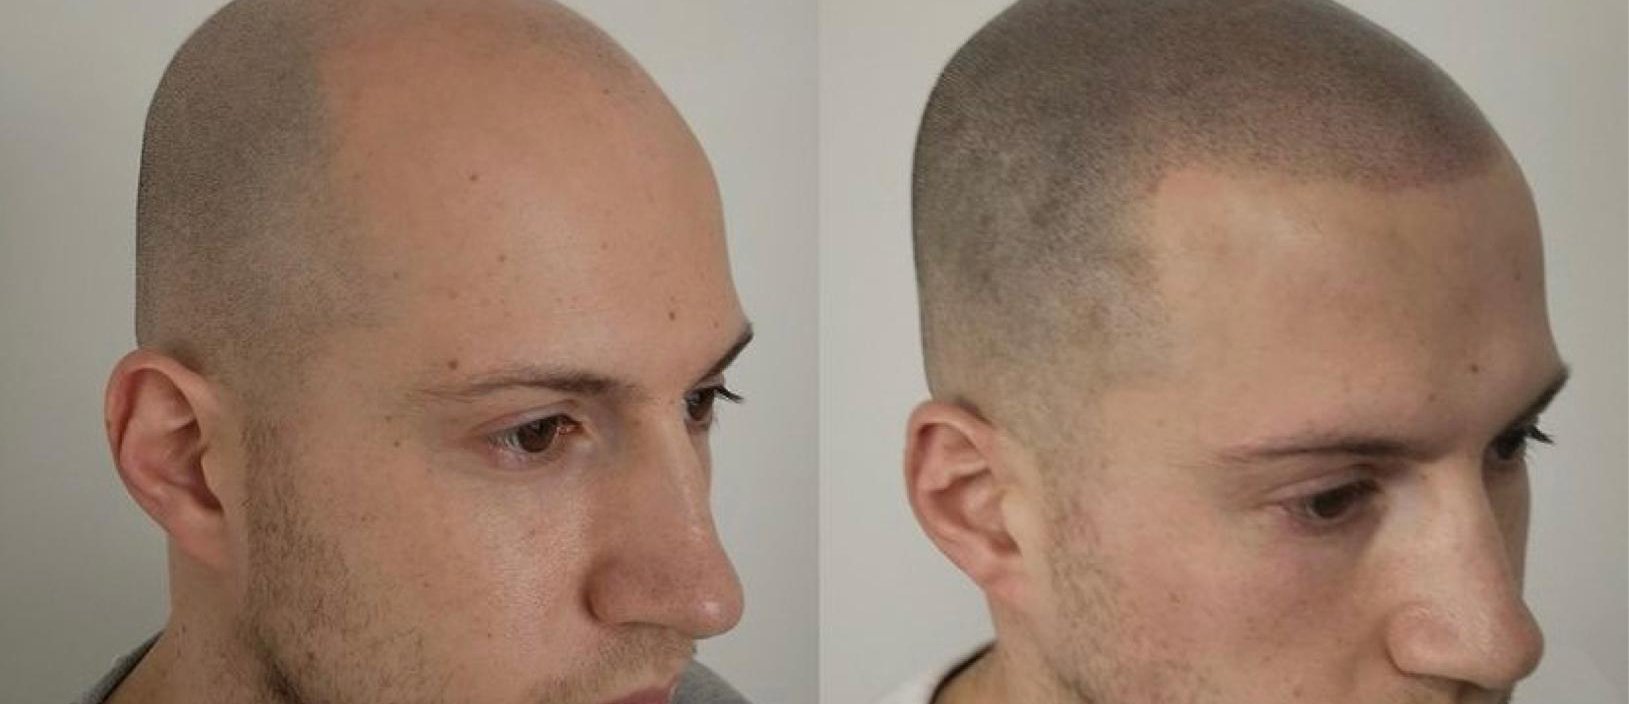 Scalp Micro pigmentation Results for Asian men